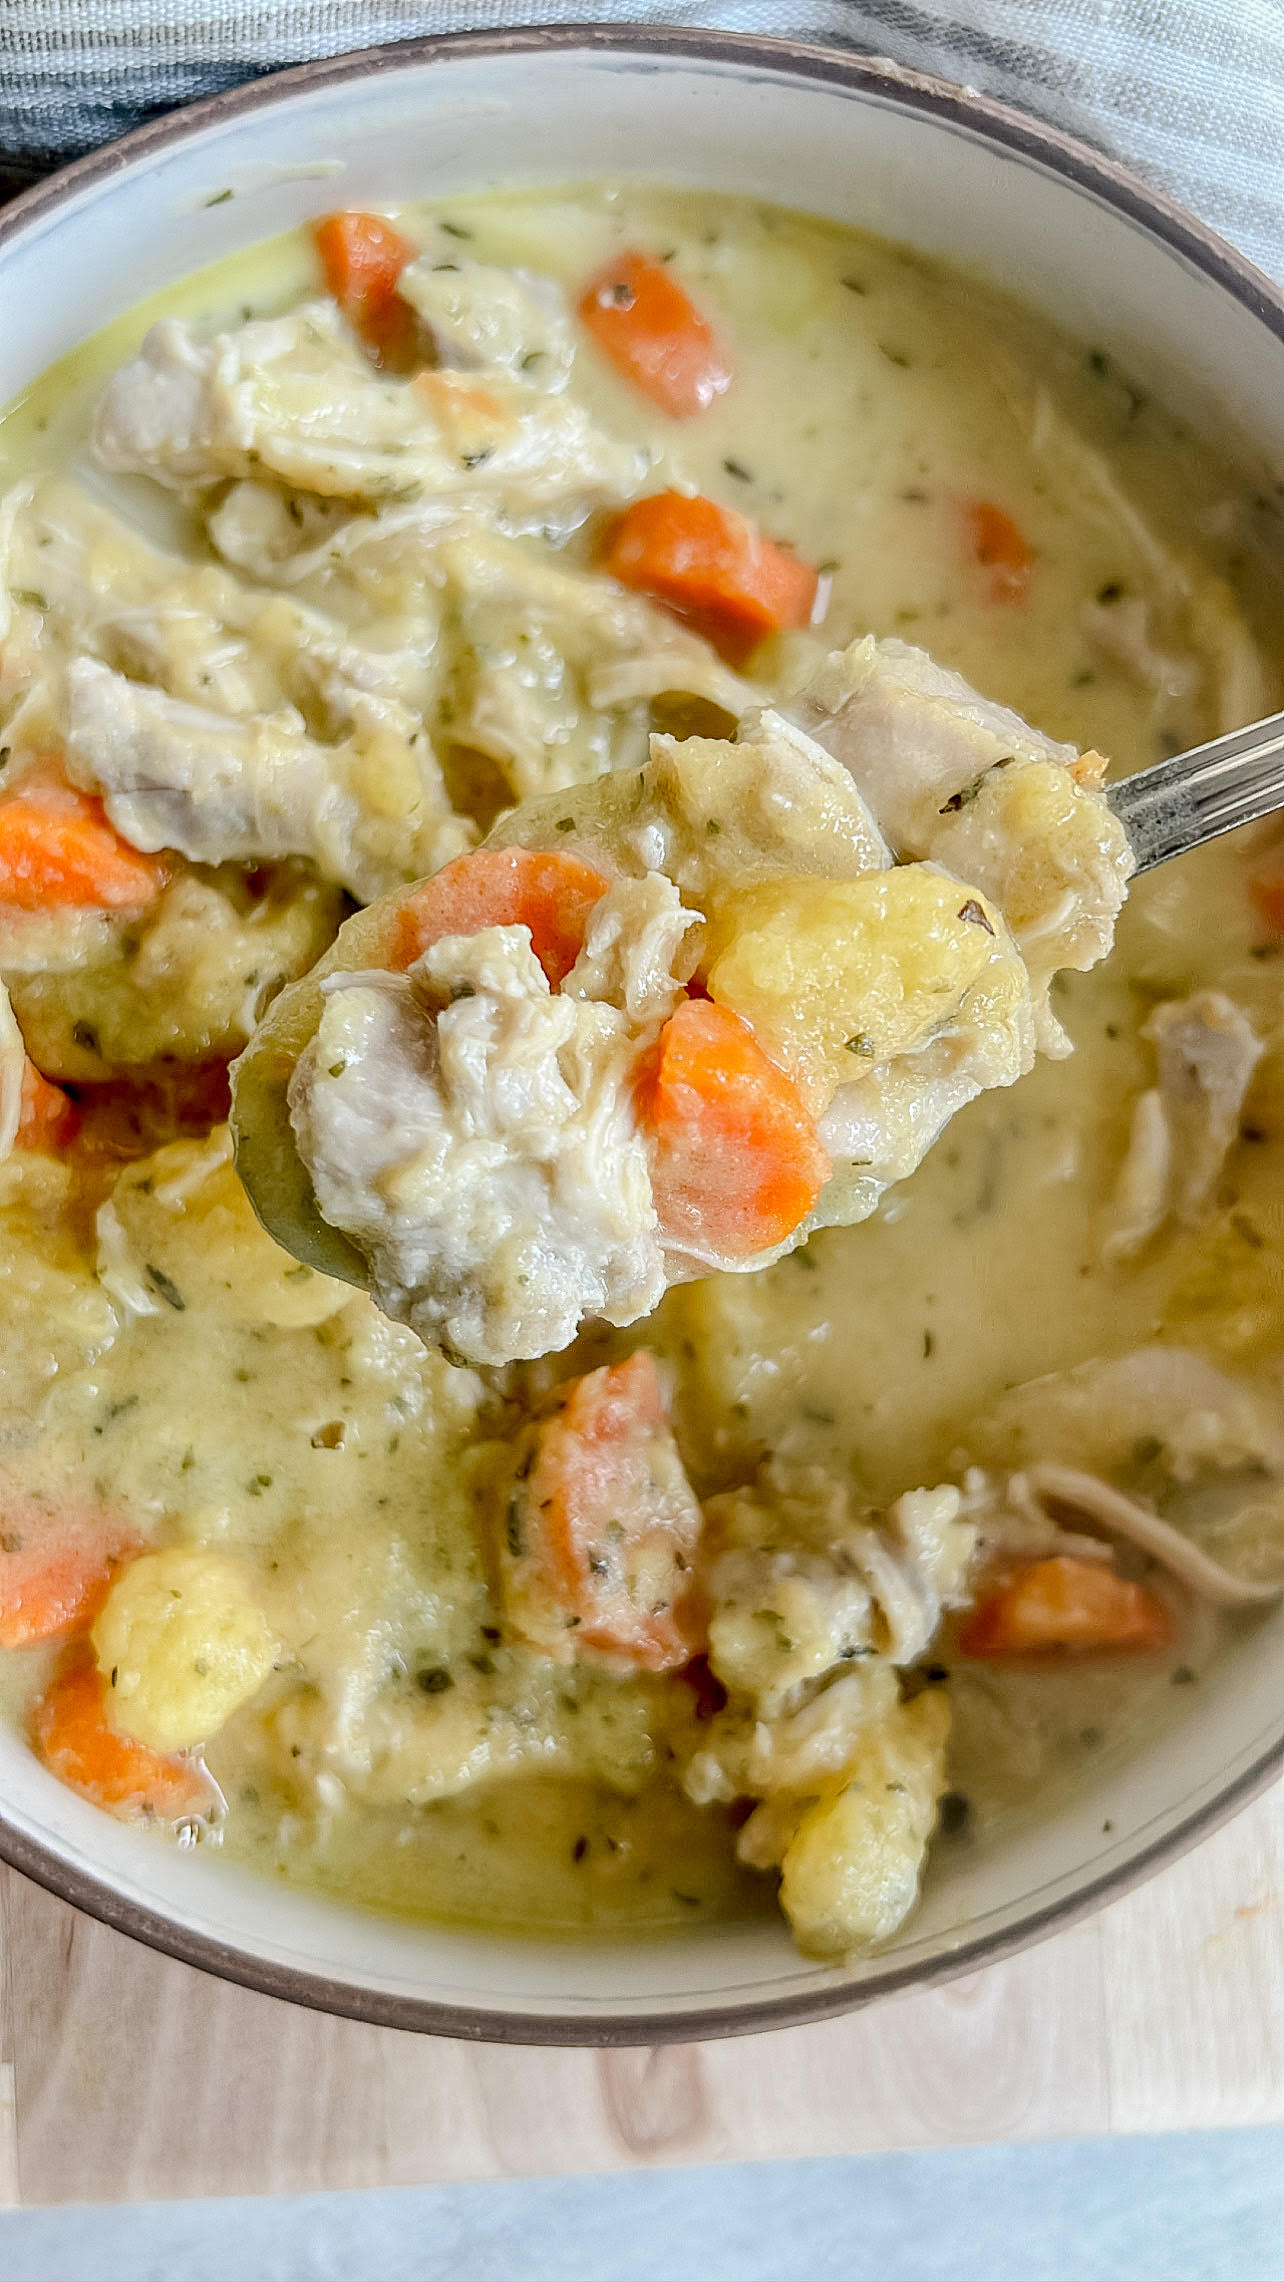 animal-based chicken pot pie soup